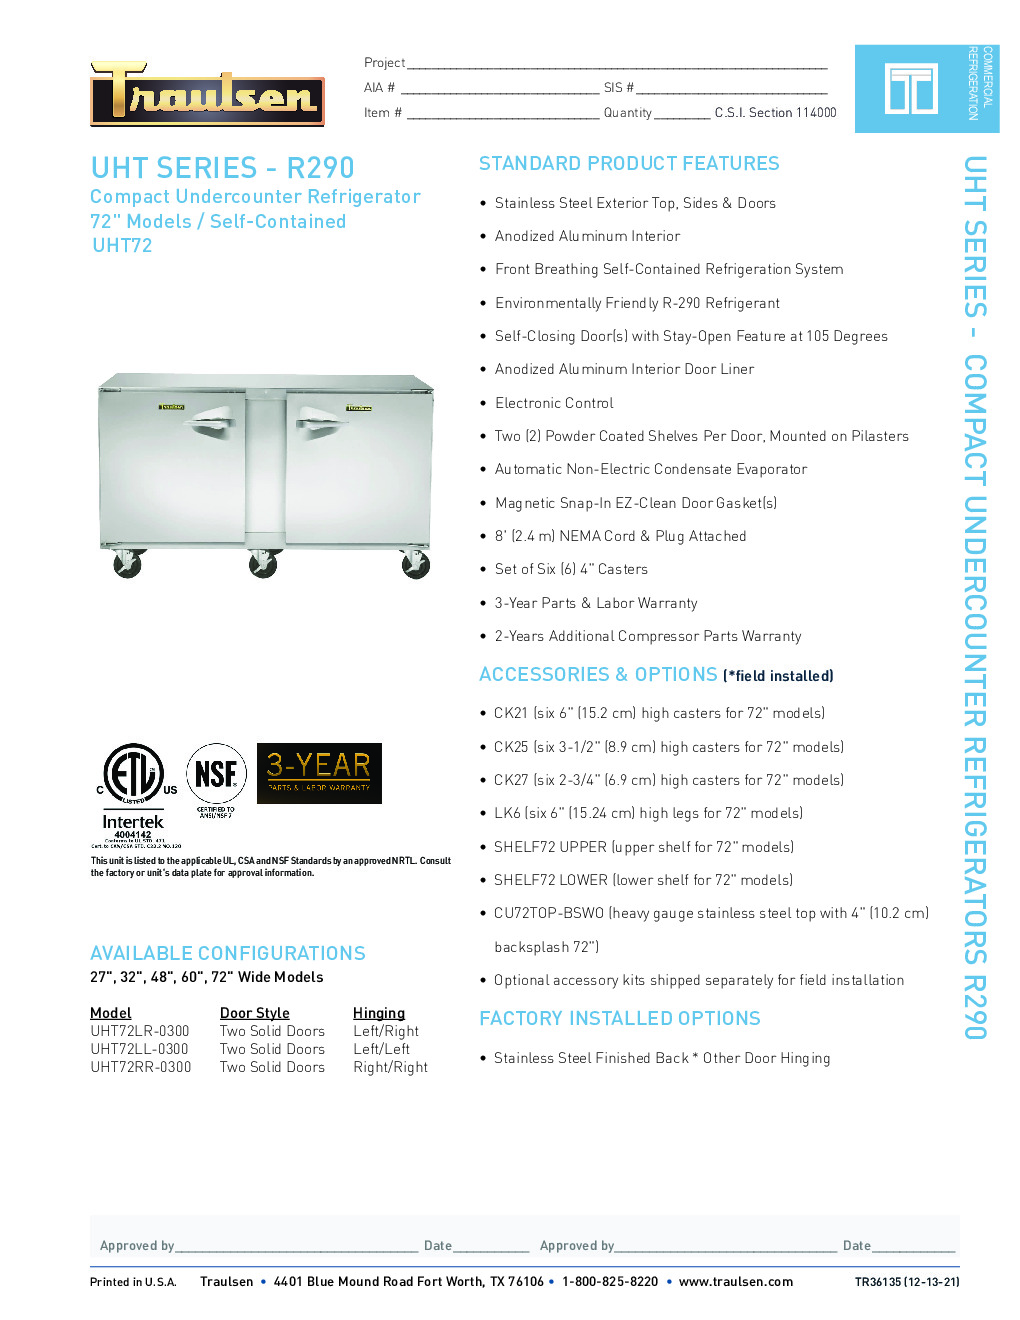 Traulsen UHT72RR-0300 Reach-In Undercounter Refrigerator